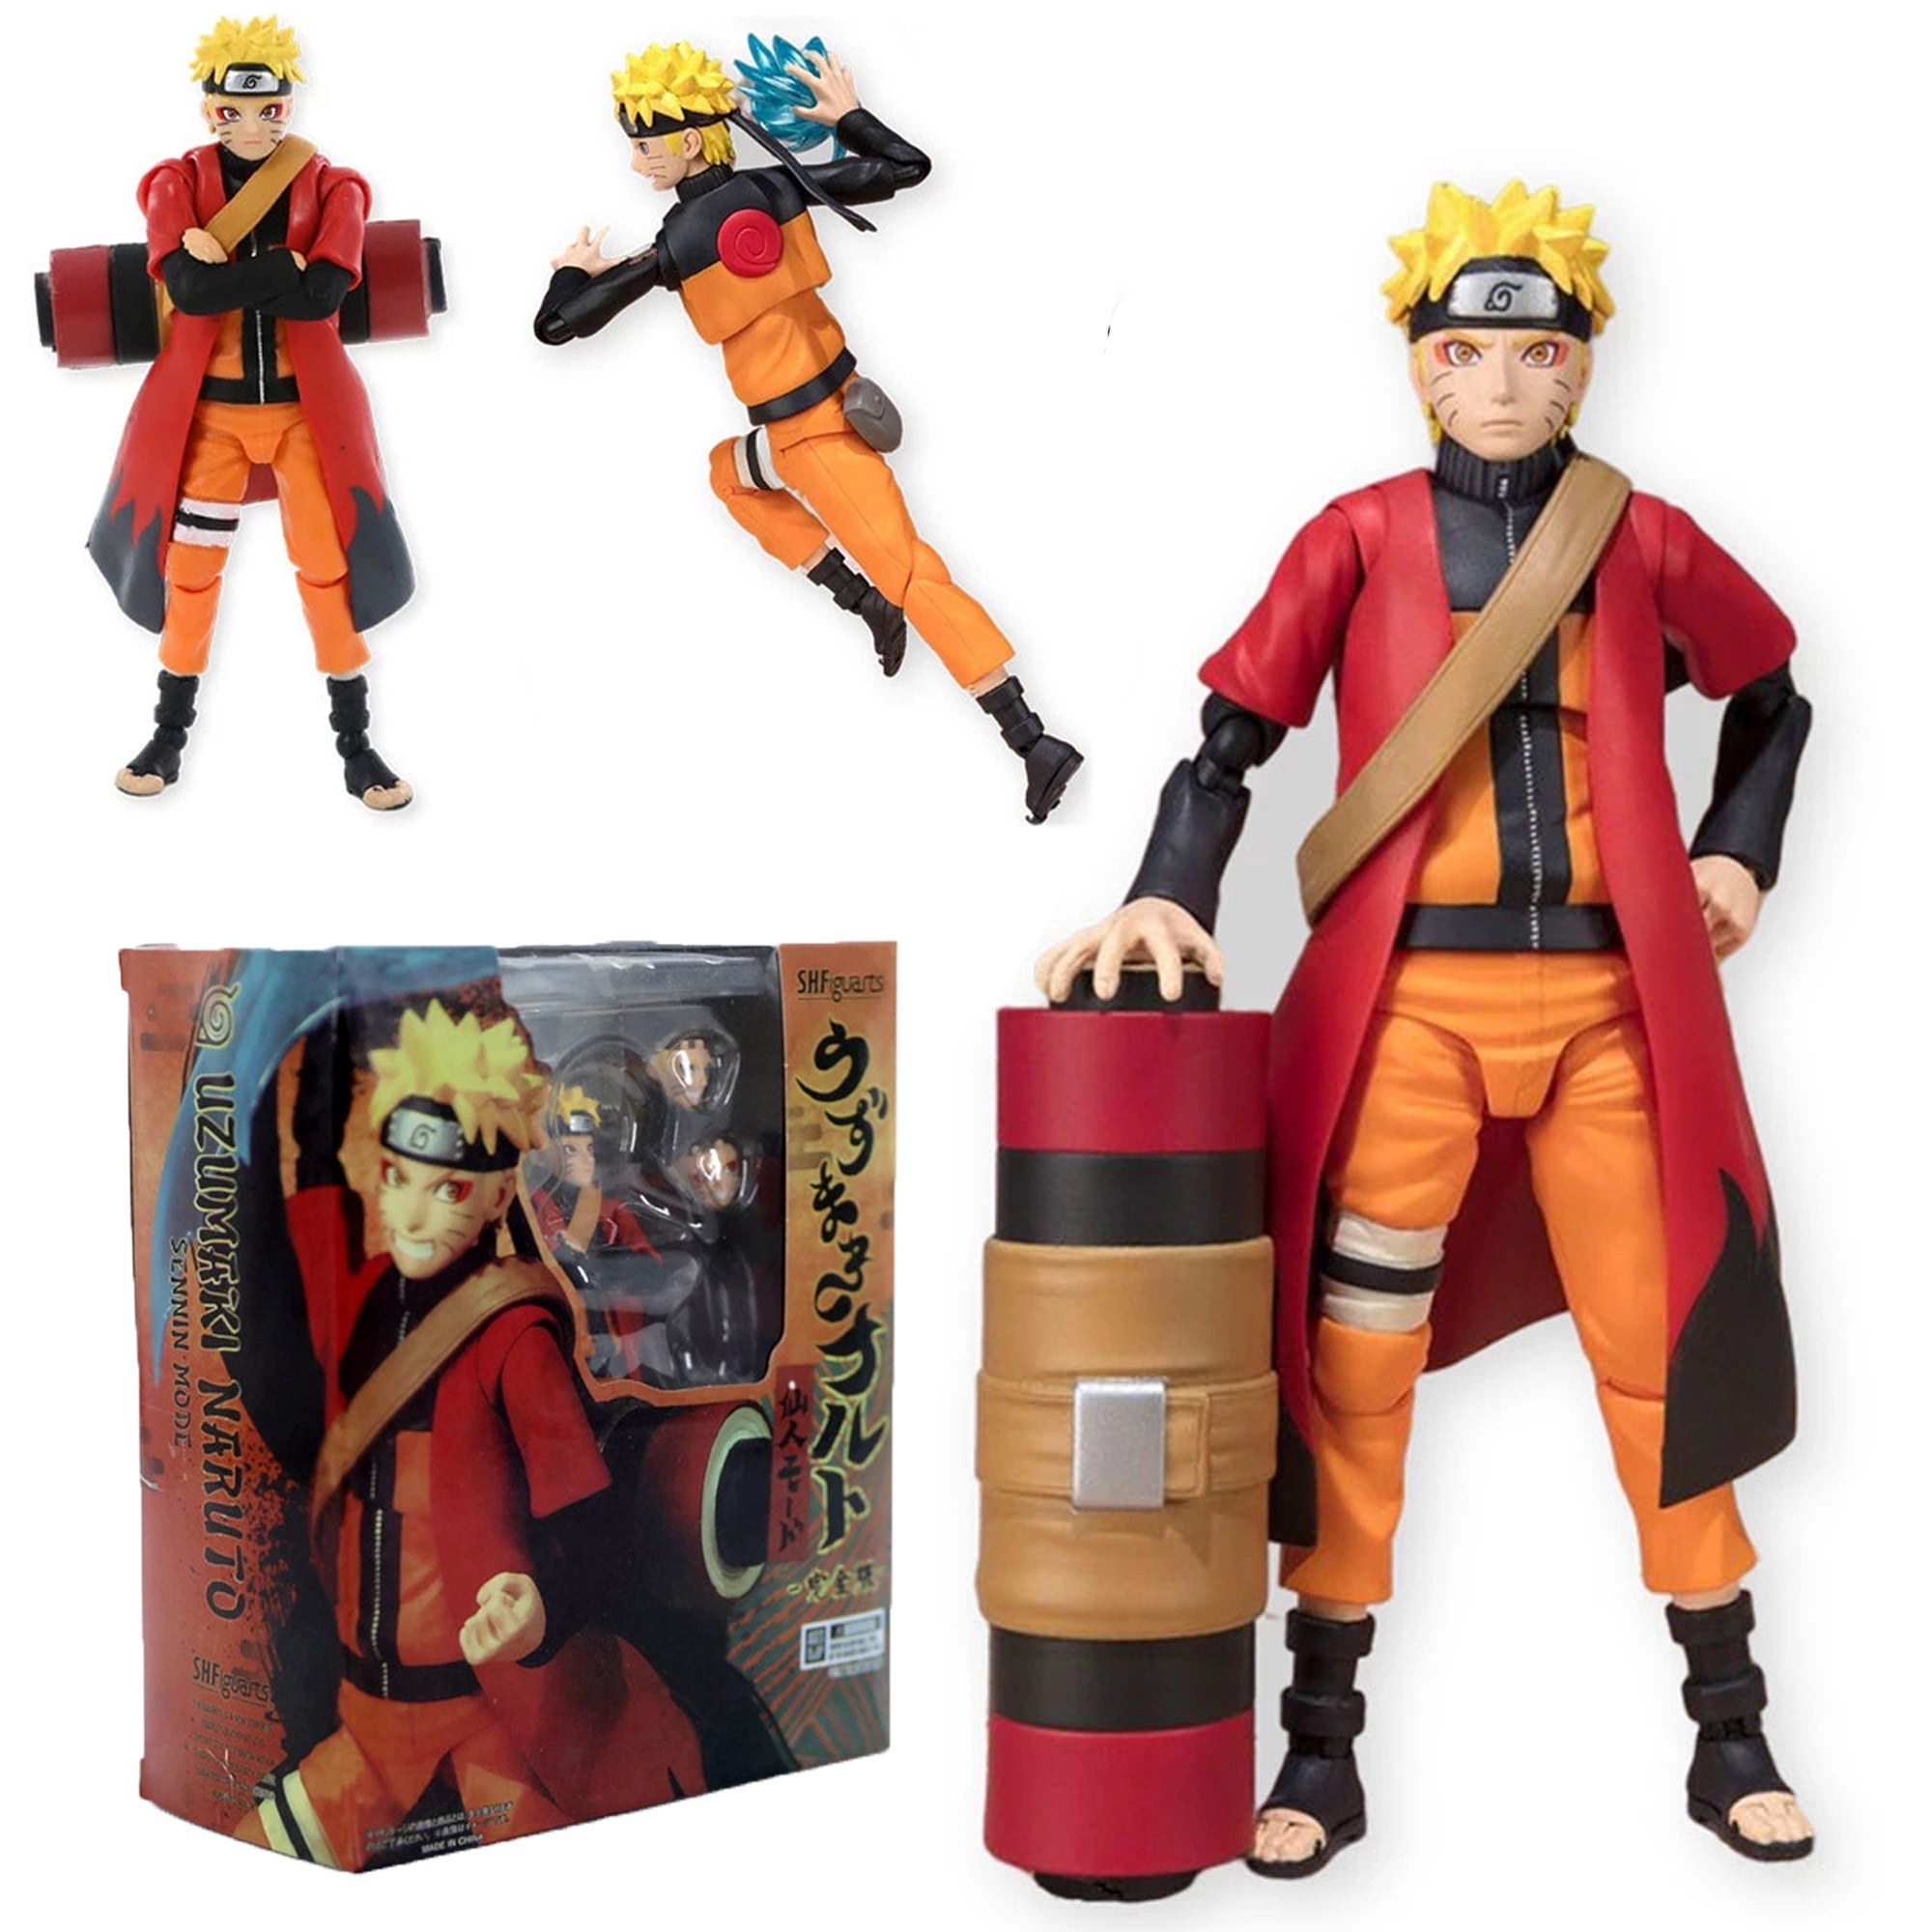 Bandai Anime Heroes Naruto Naruto Uzumaki Action Figure, 42% OFF